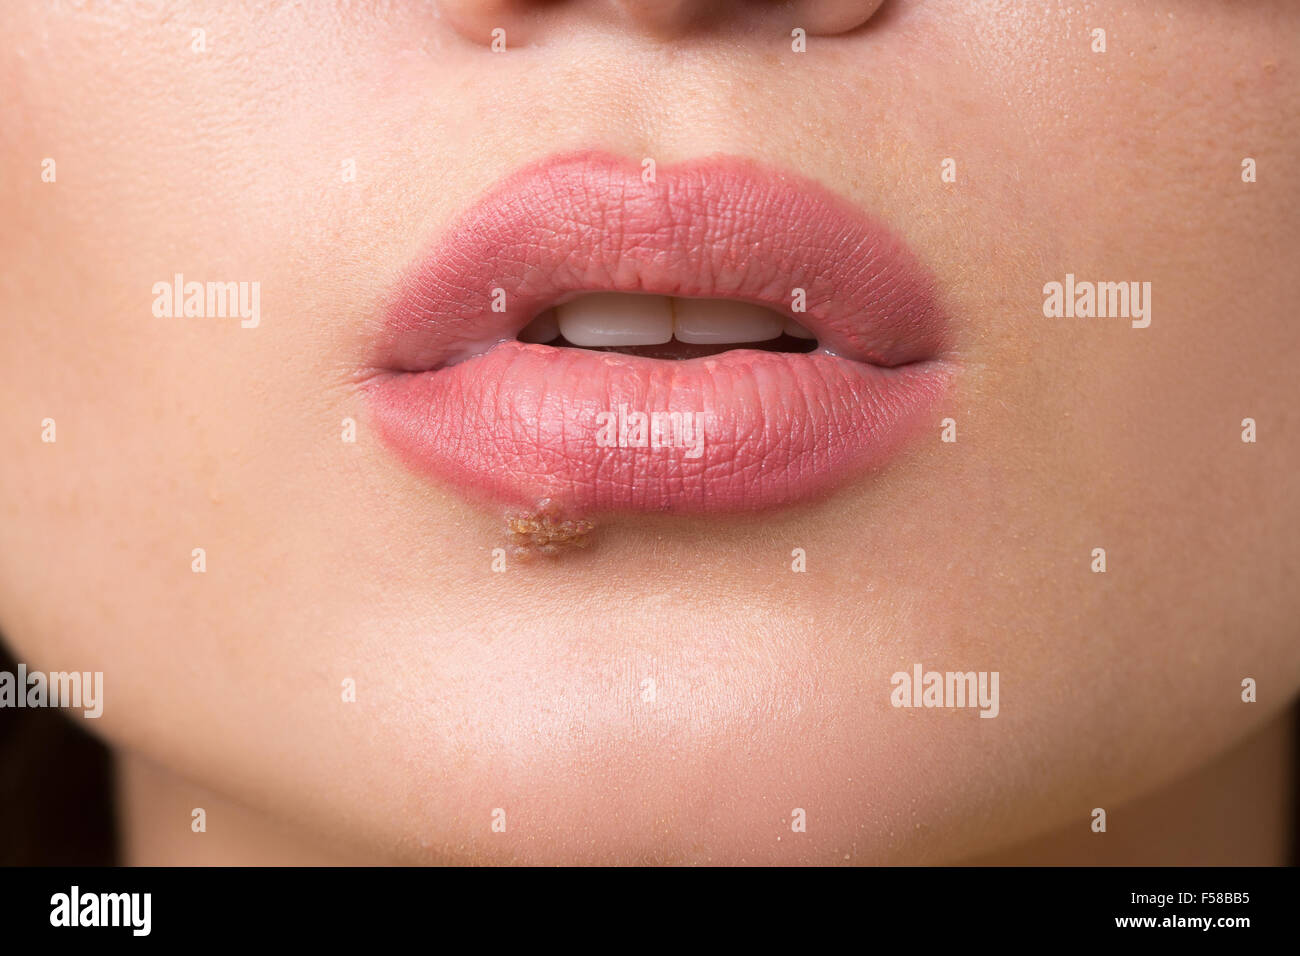 beautiful lips virus infected herpes Stock Photo